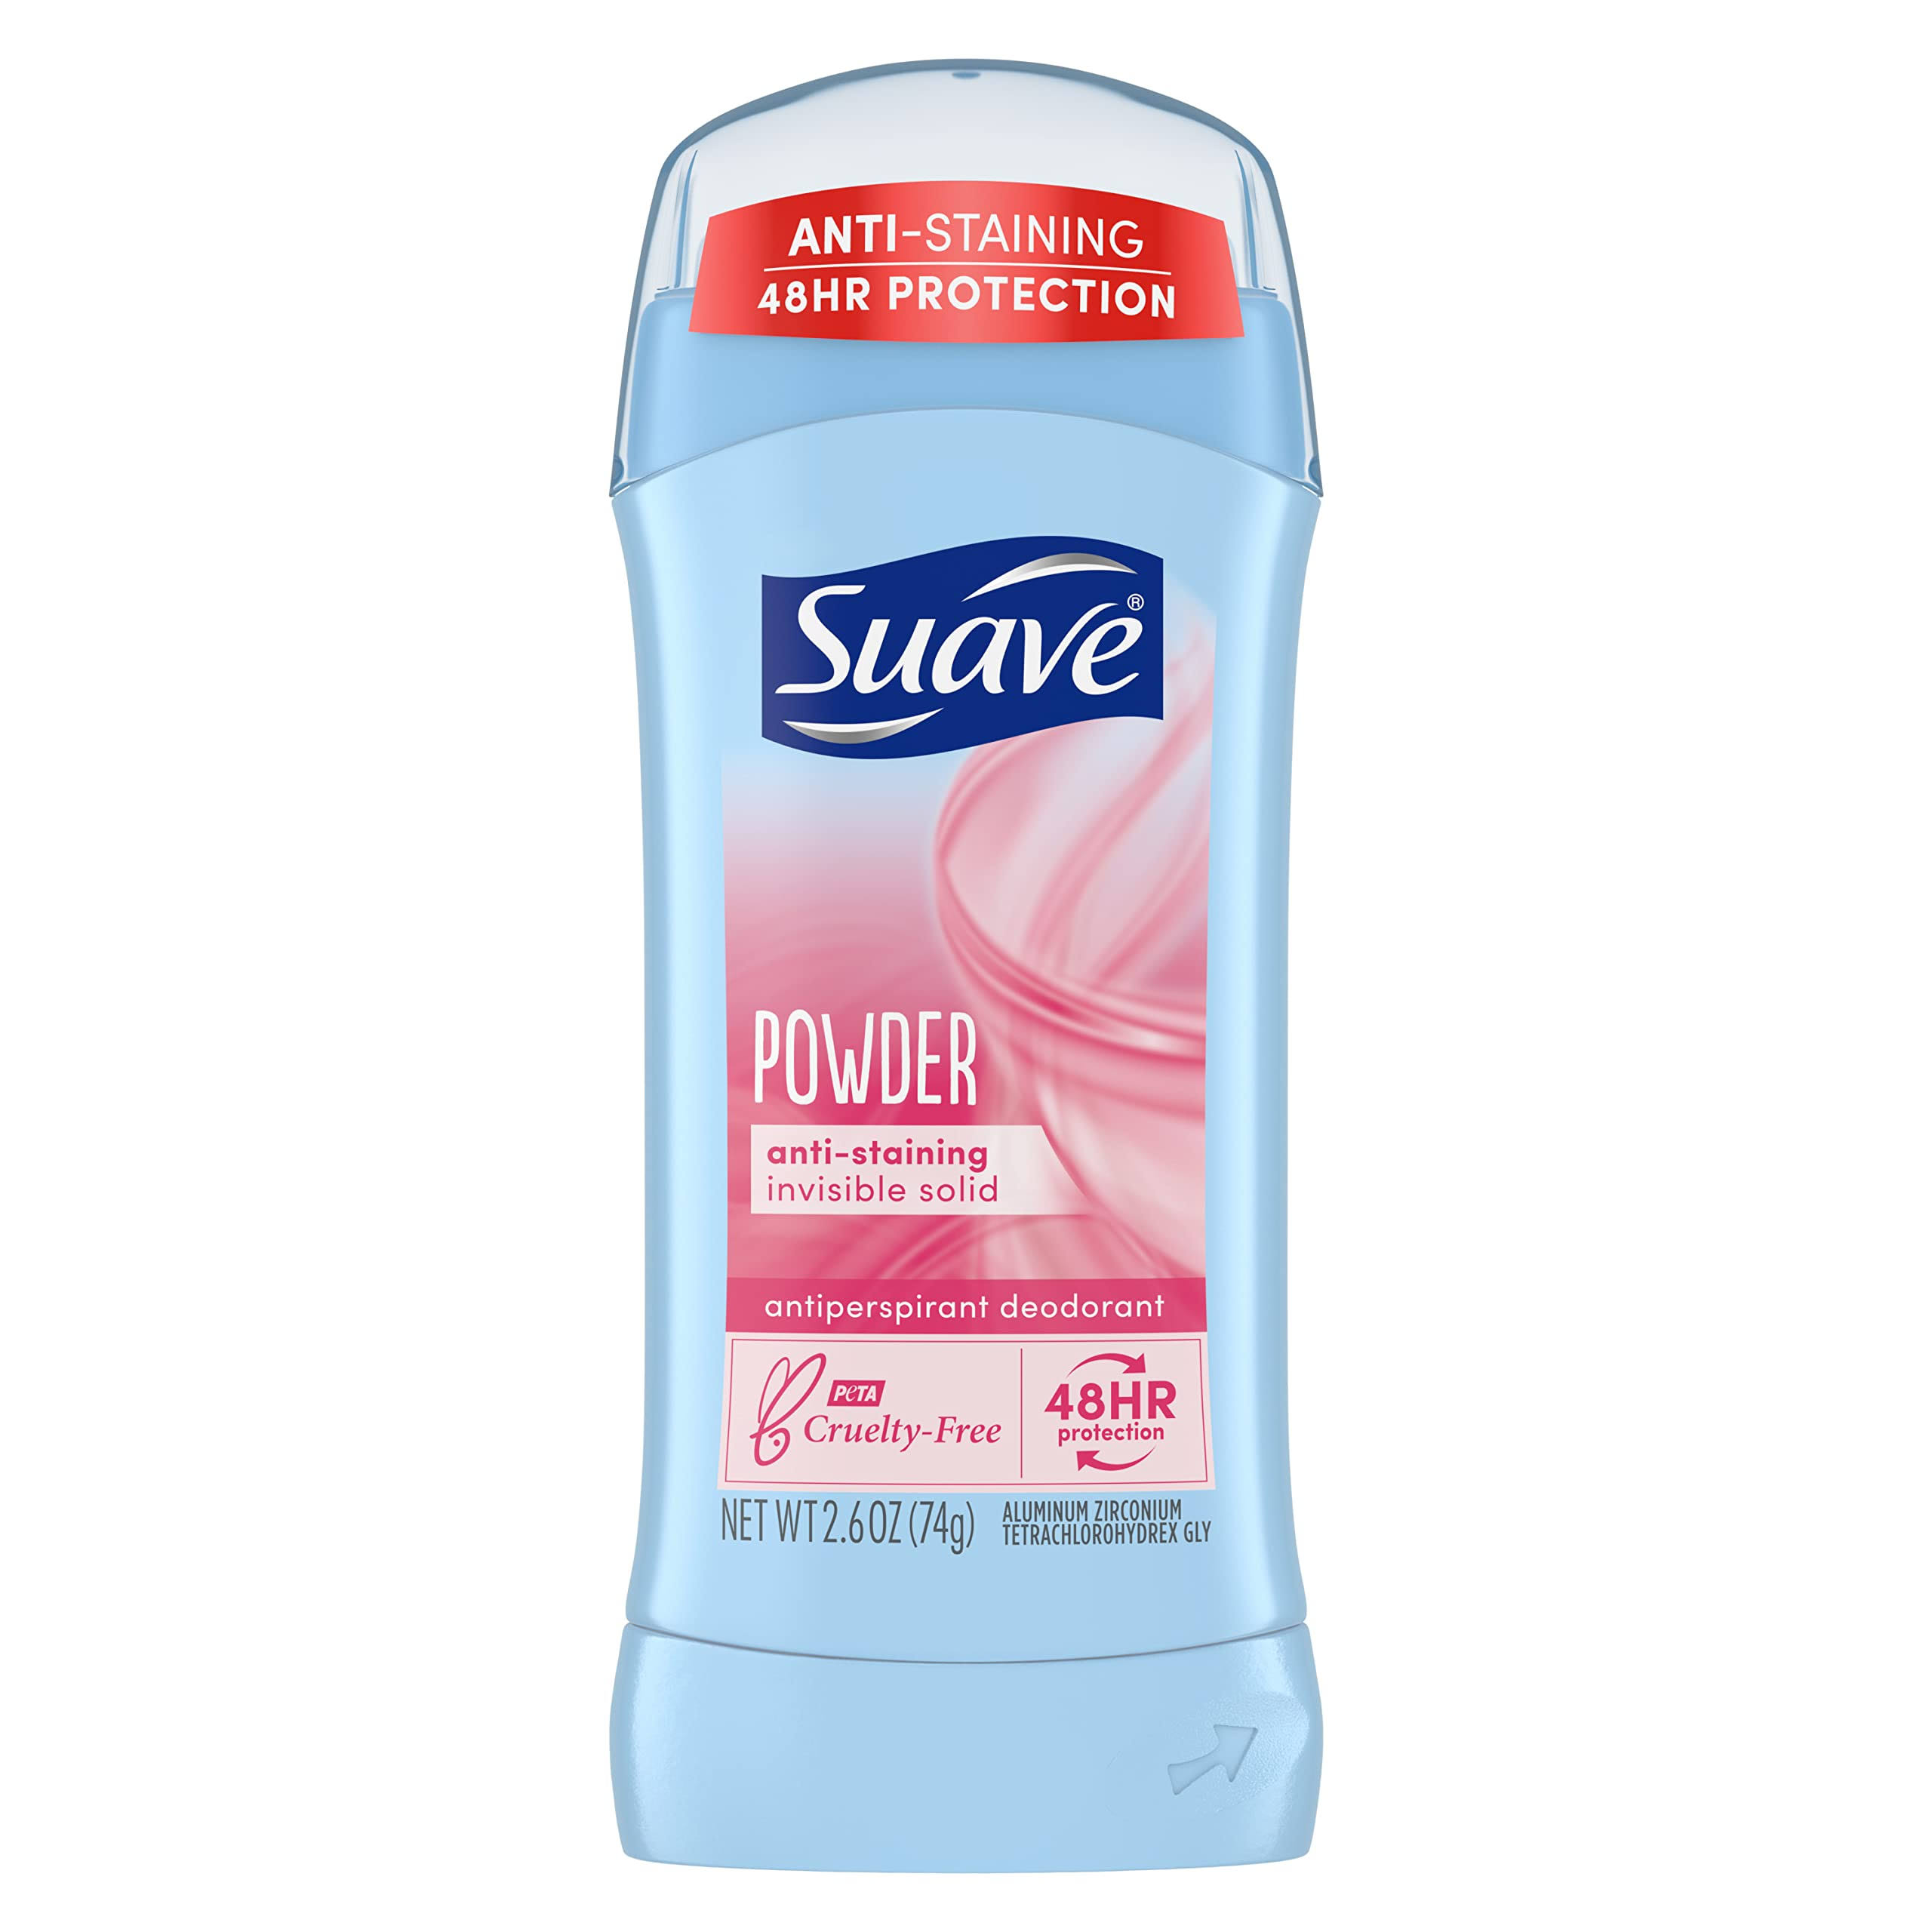 Suave Powder Invisible Solid Anti-Perspirant Deodorant - 2.6oz